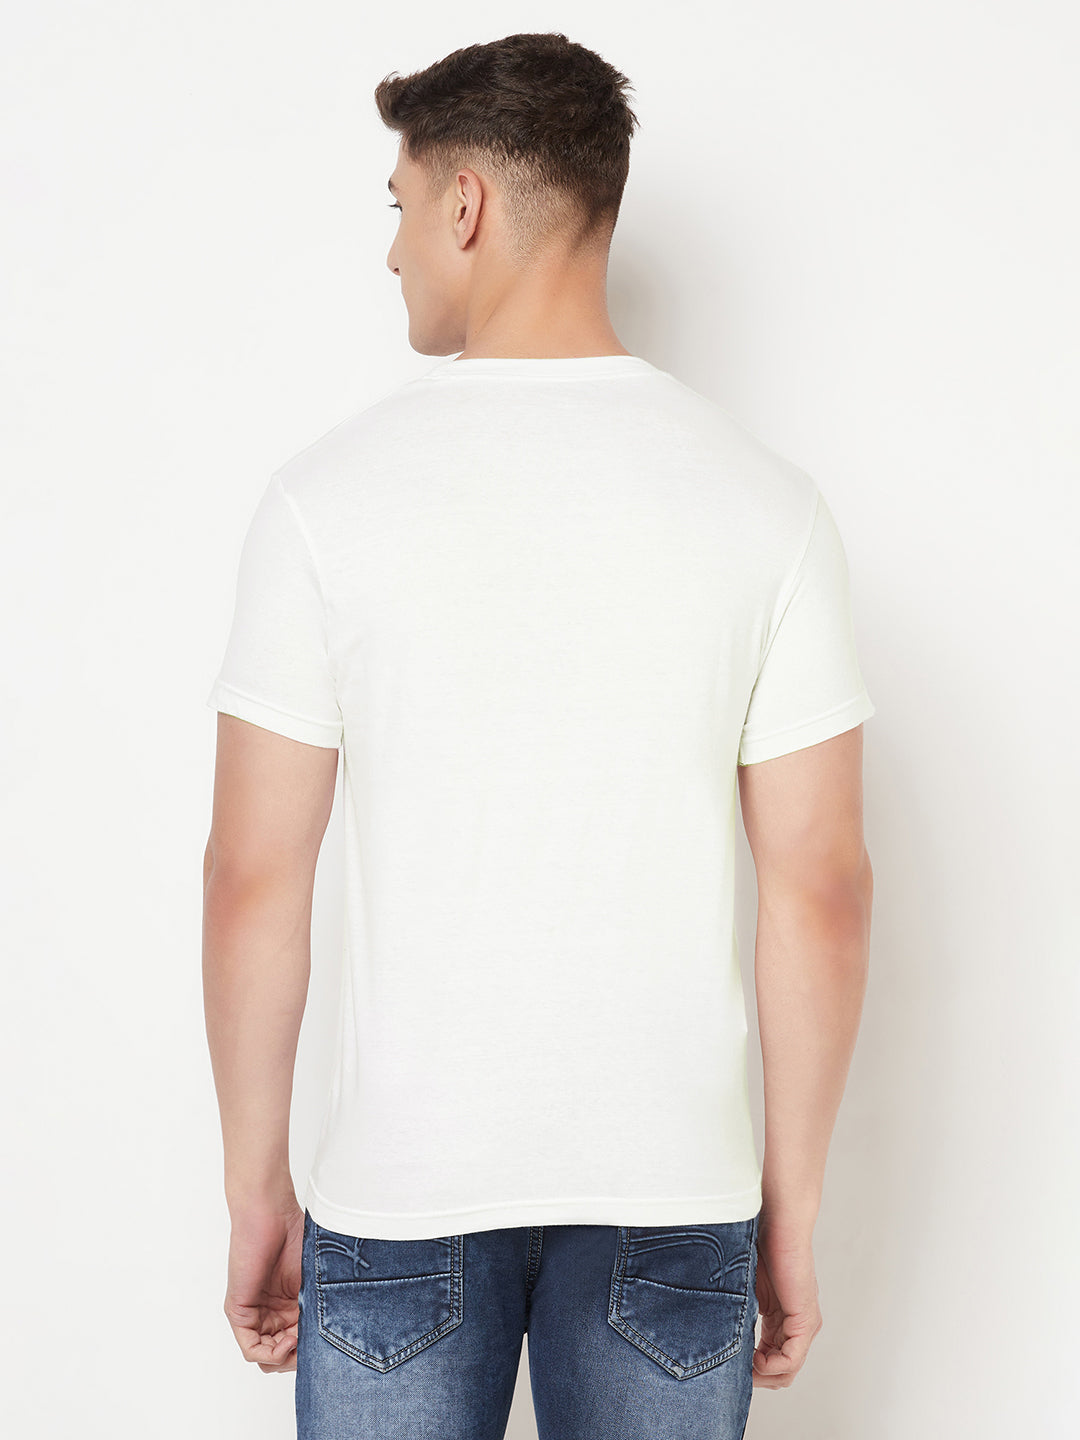 Men's Premium Cotton Tshirts  (Pack of 3- Maroon, White, Grey) - NITLON * TRUEREVO